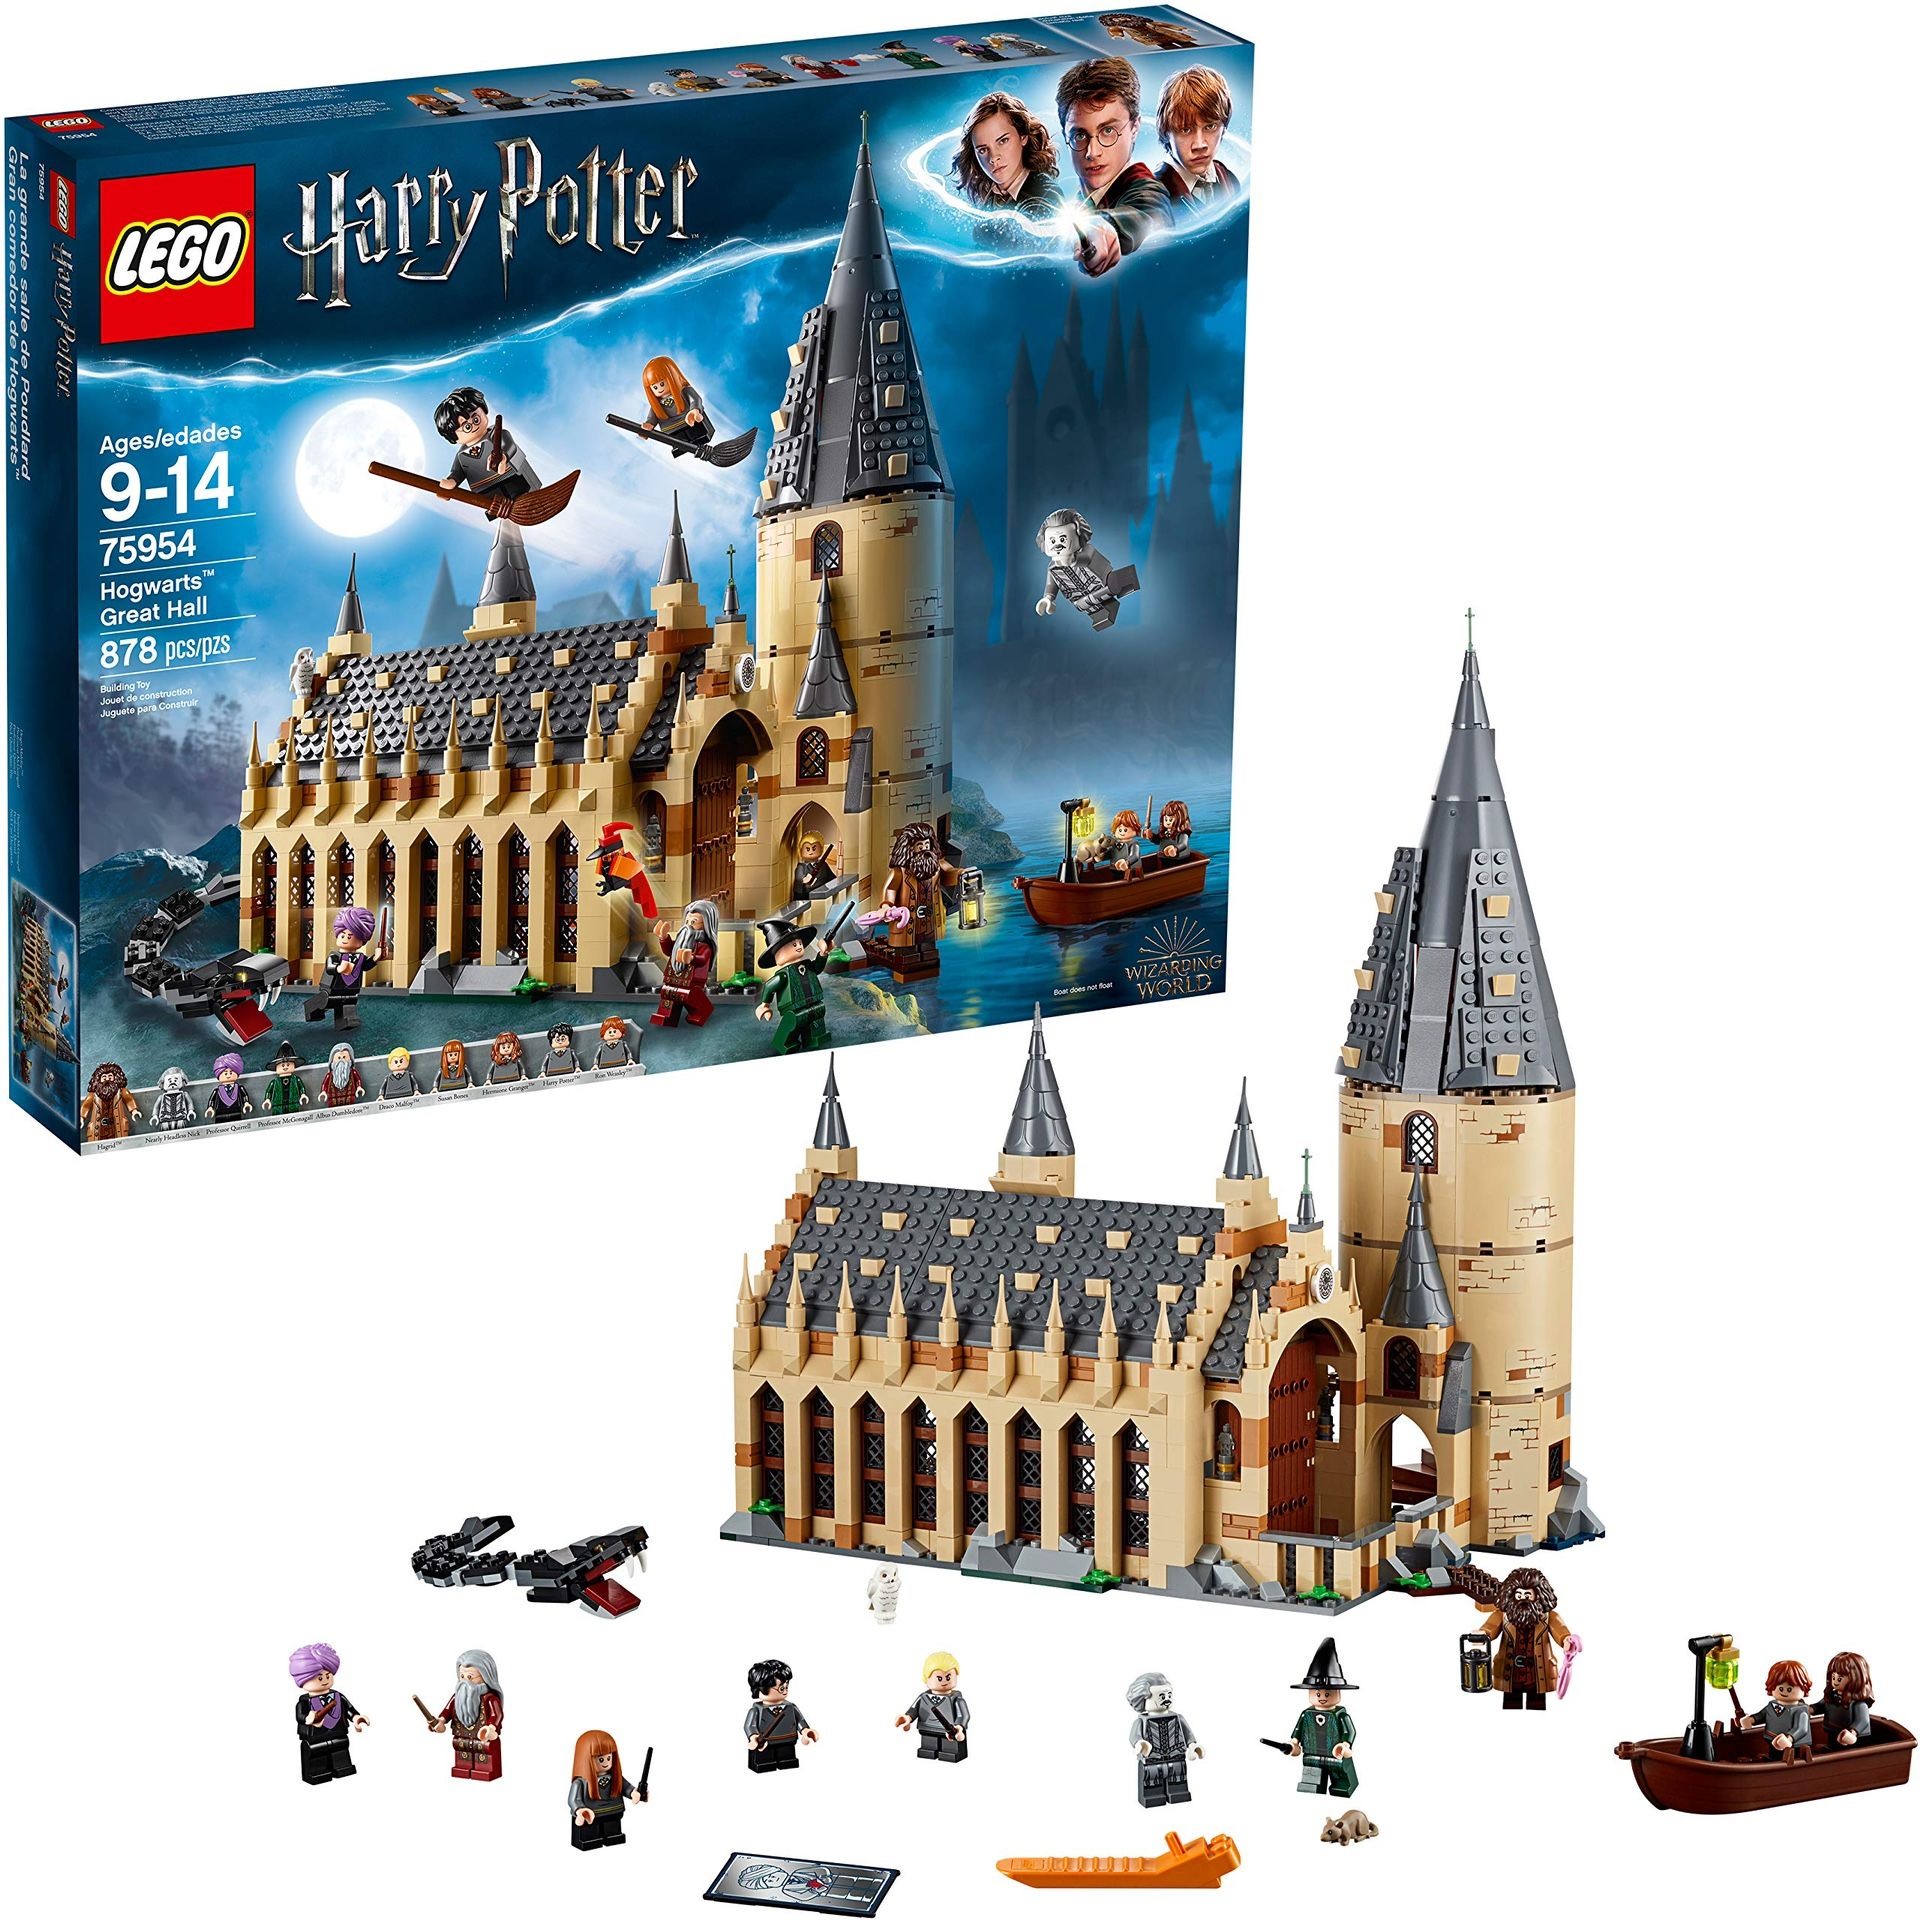 Harry Potter Castle Lego Set